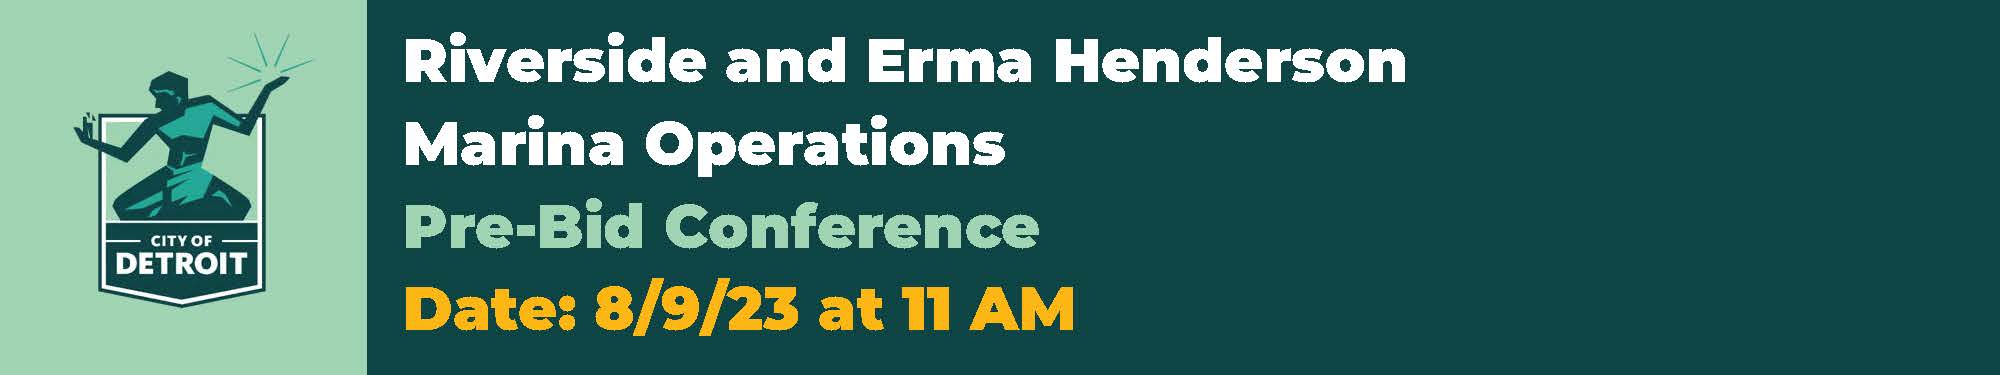 Take Part in Riverside and Erma Henderson Marina Pre-Bid Conference